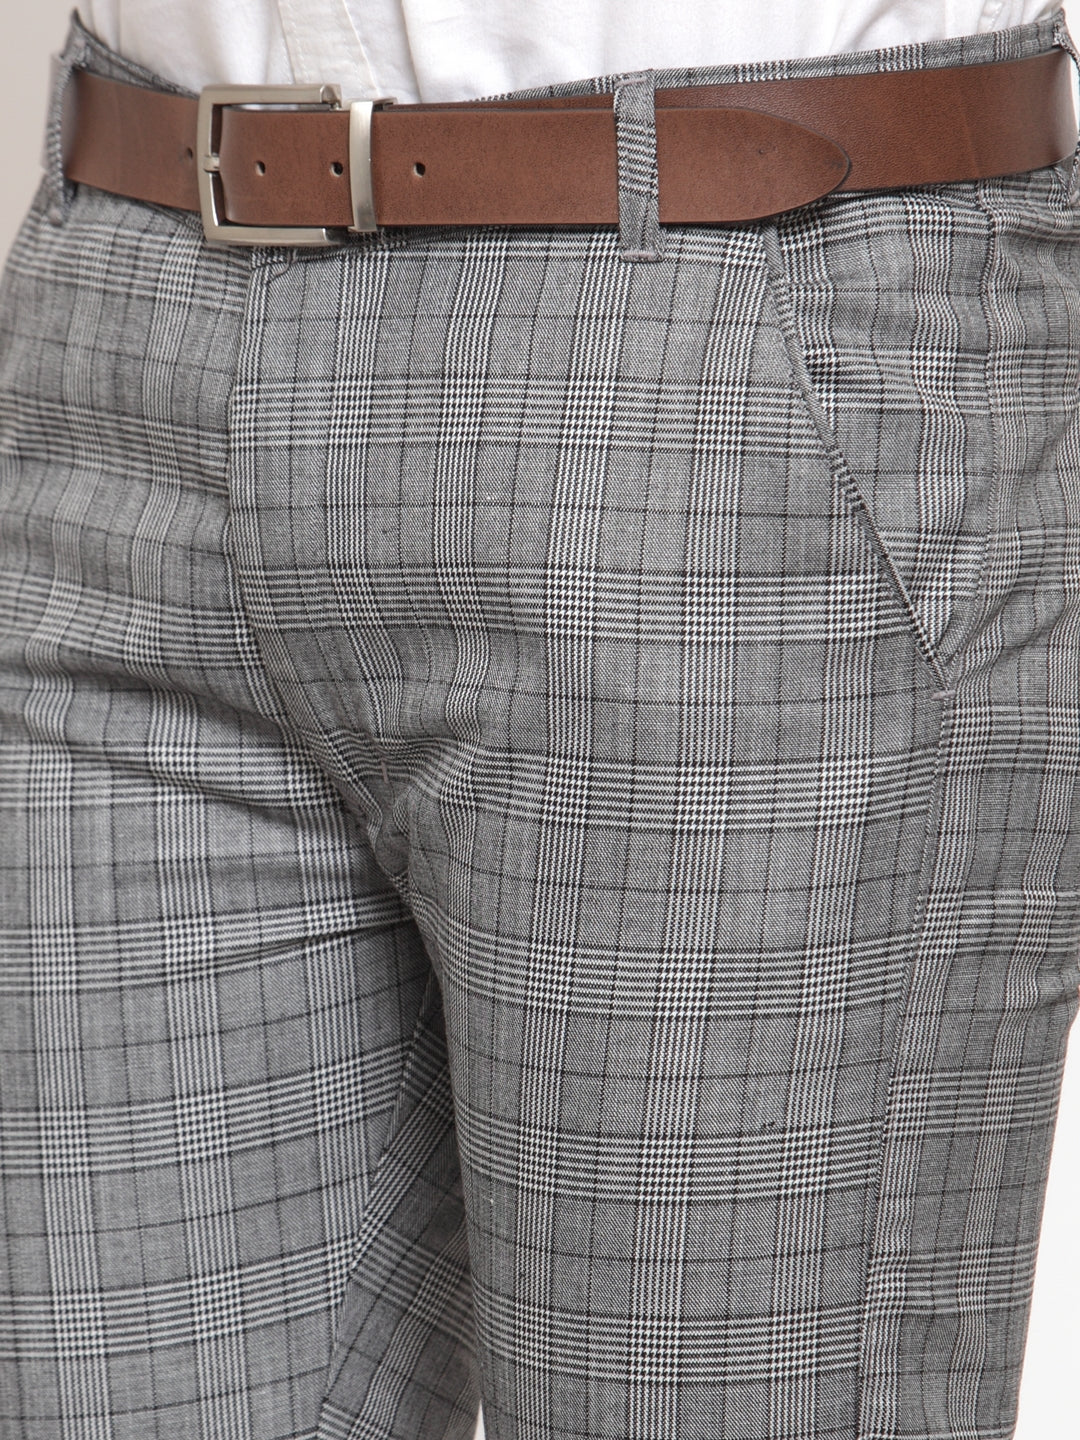 Jainish Men's Grey Checked Formal Trousers